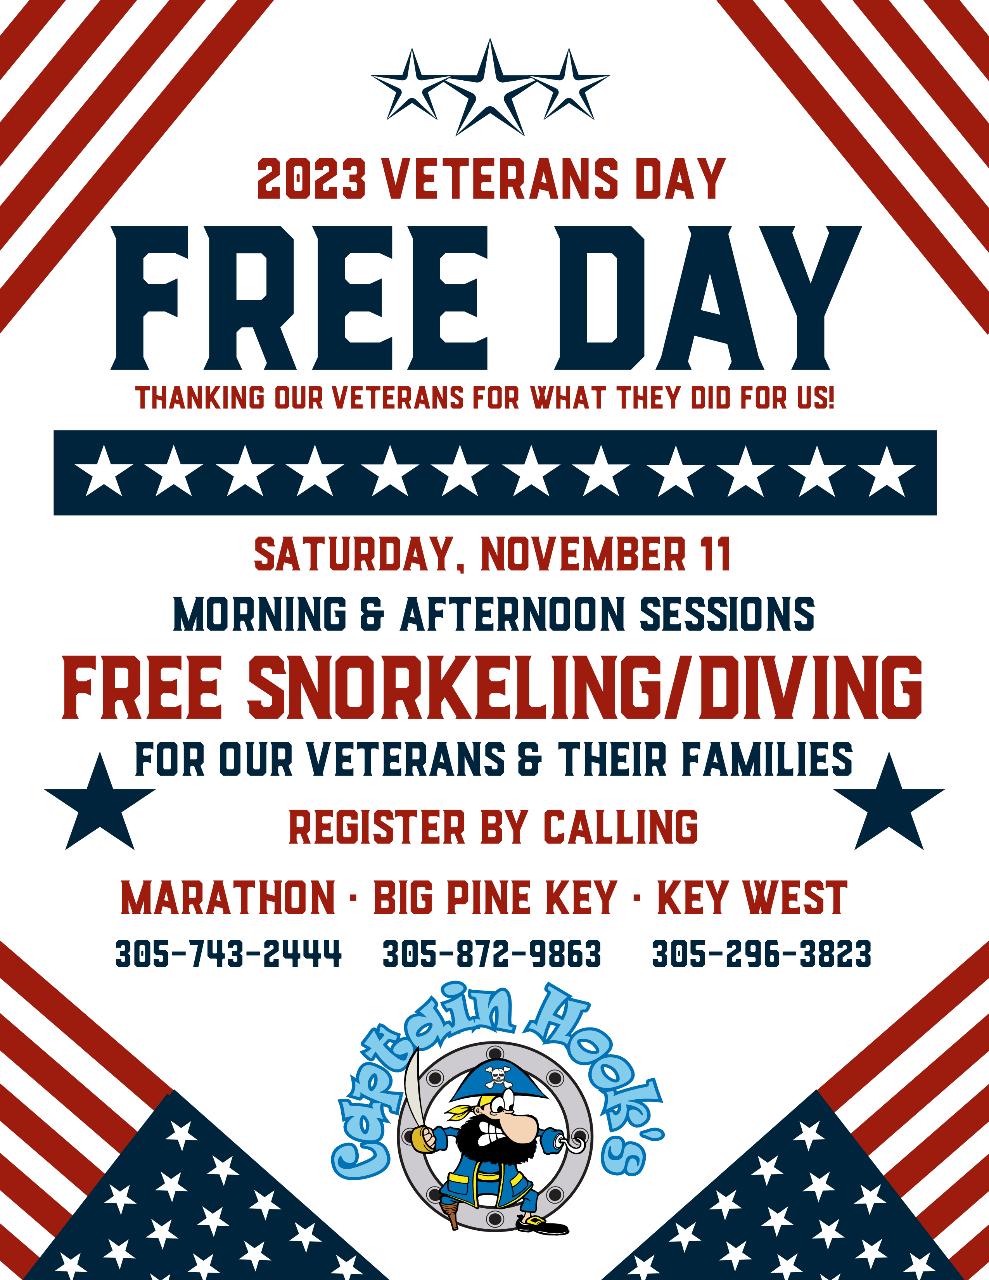 Veterans Day Free Day Snorkel Trip - Key West